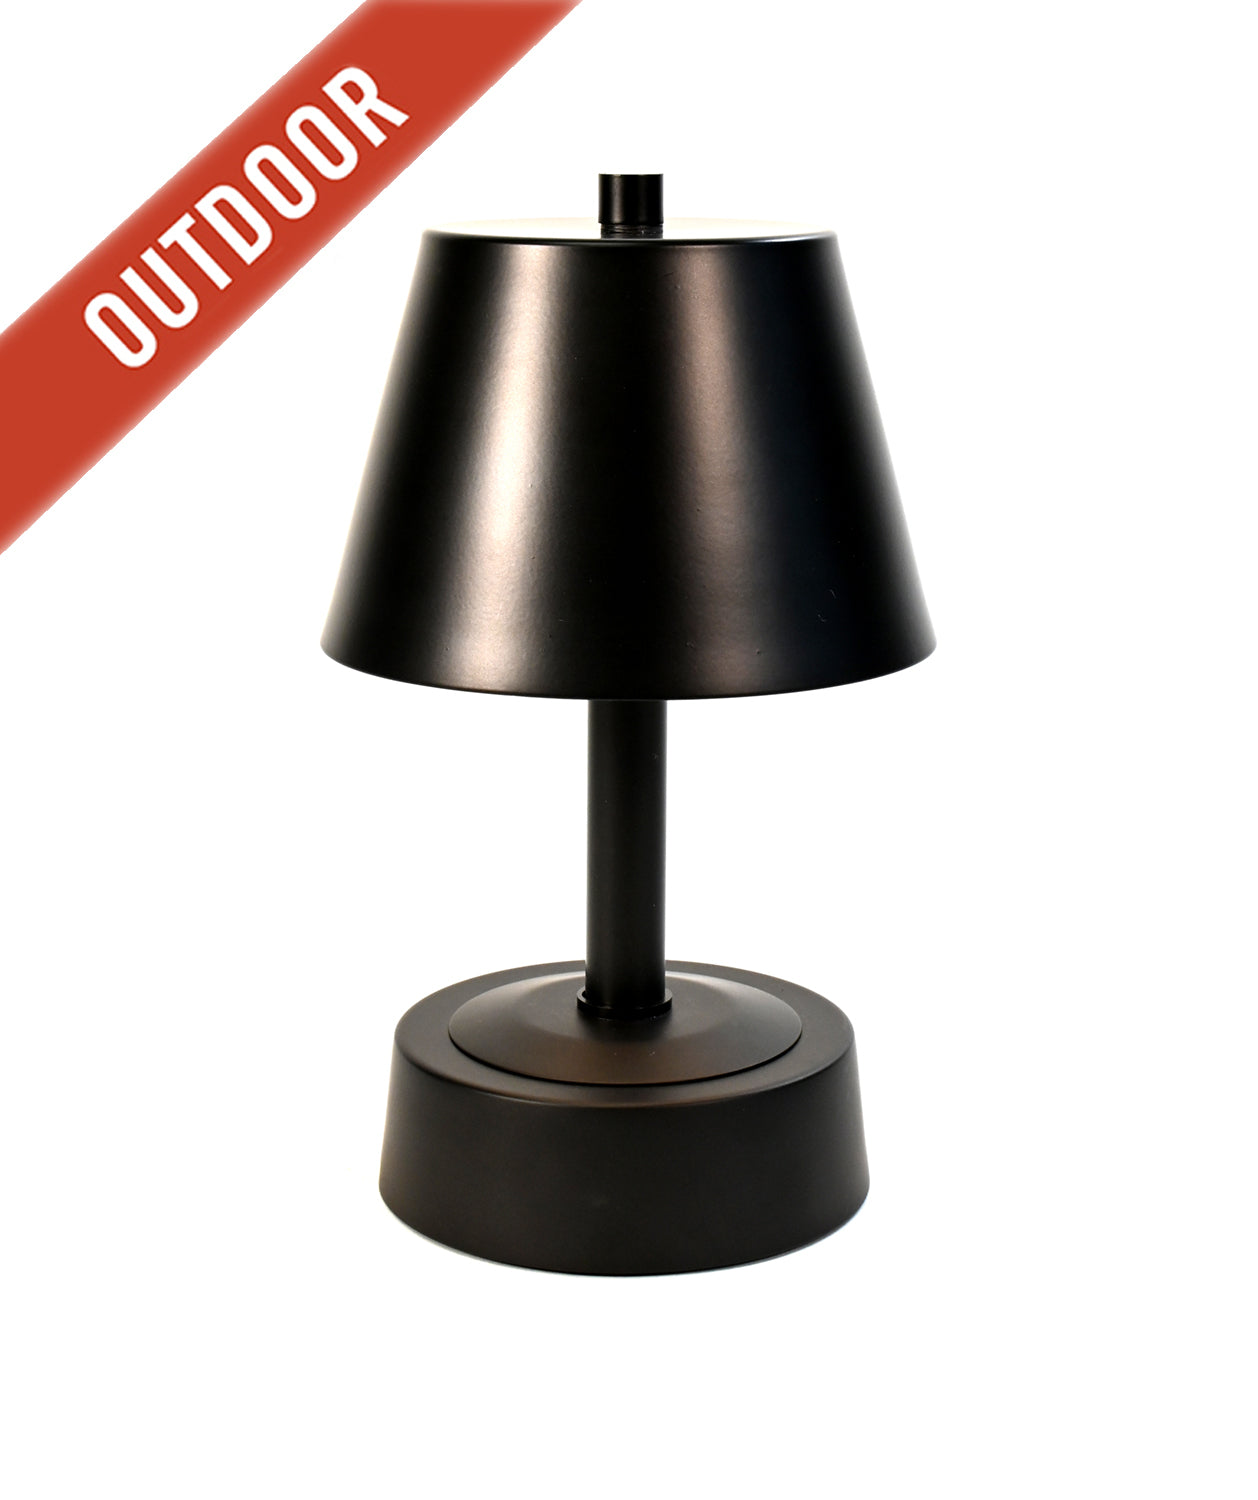 SOMMARLÅNKE LED decorative table lamp, house outdoor/battery